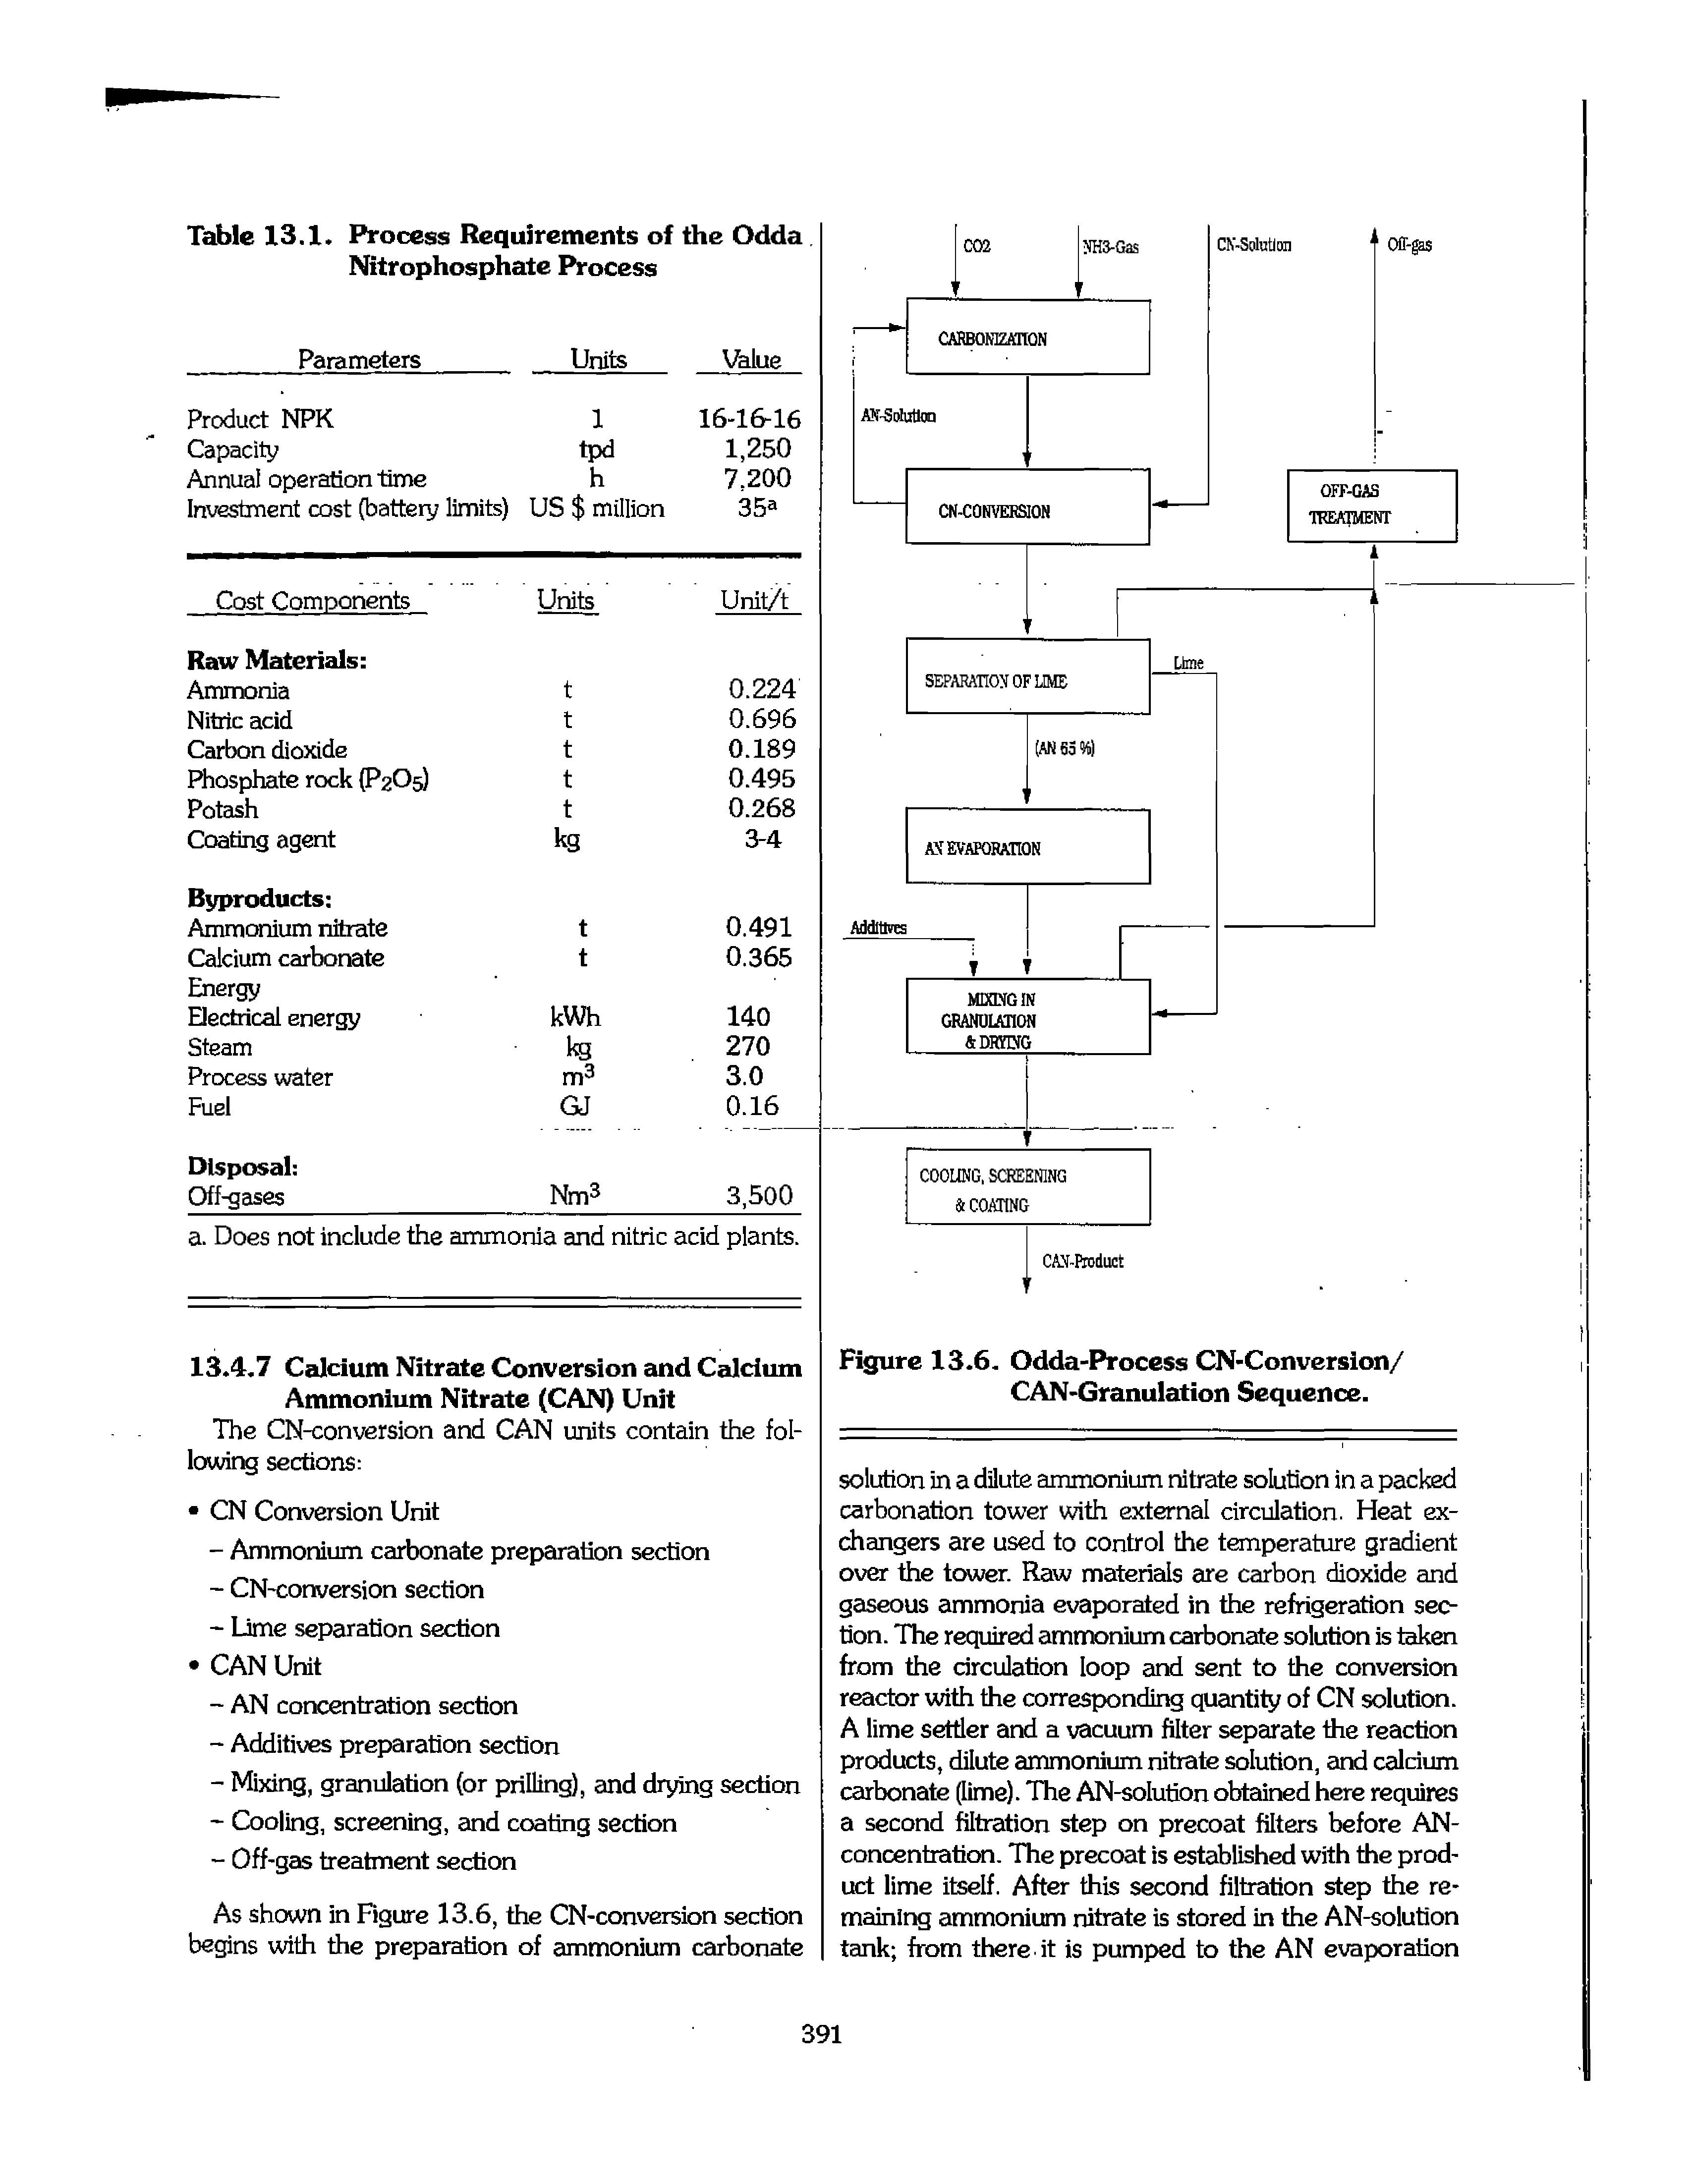 Figure 13.6. Odda-Process CN-Conversion/ CAN-Granulation Sequence.